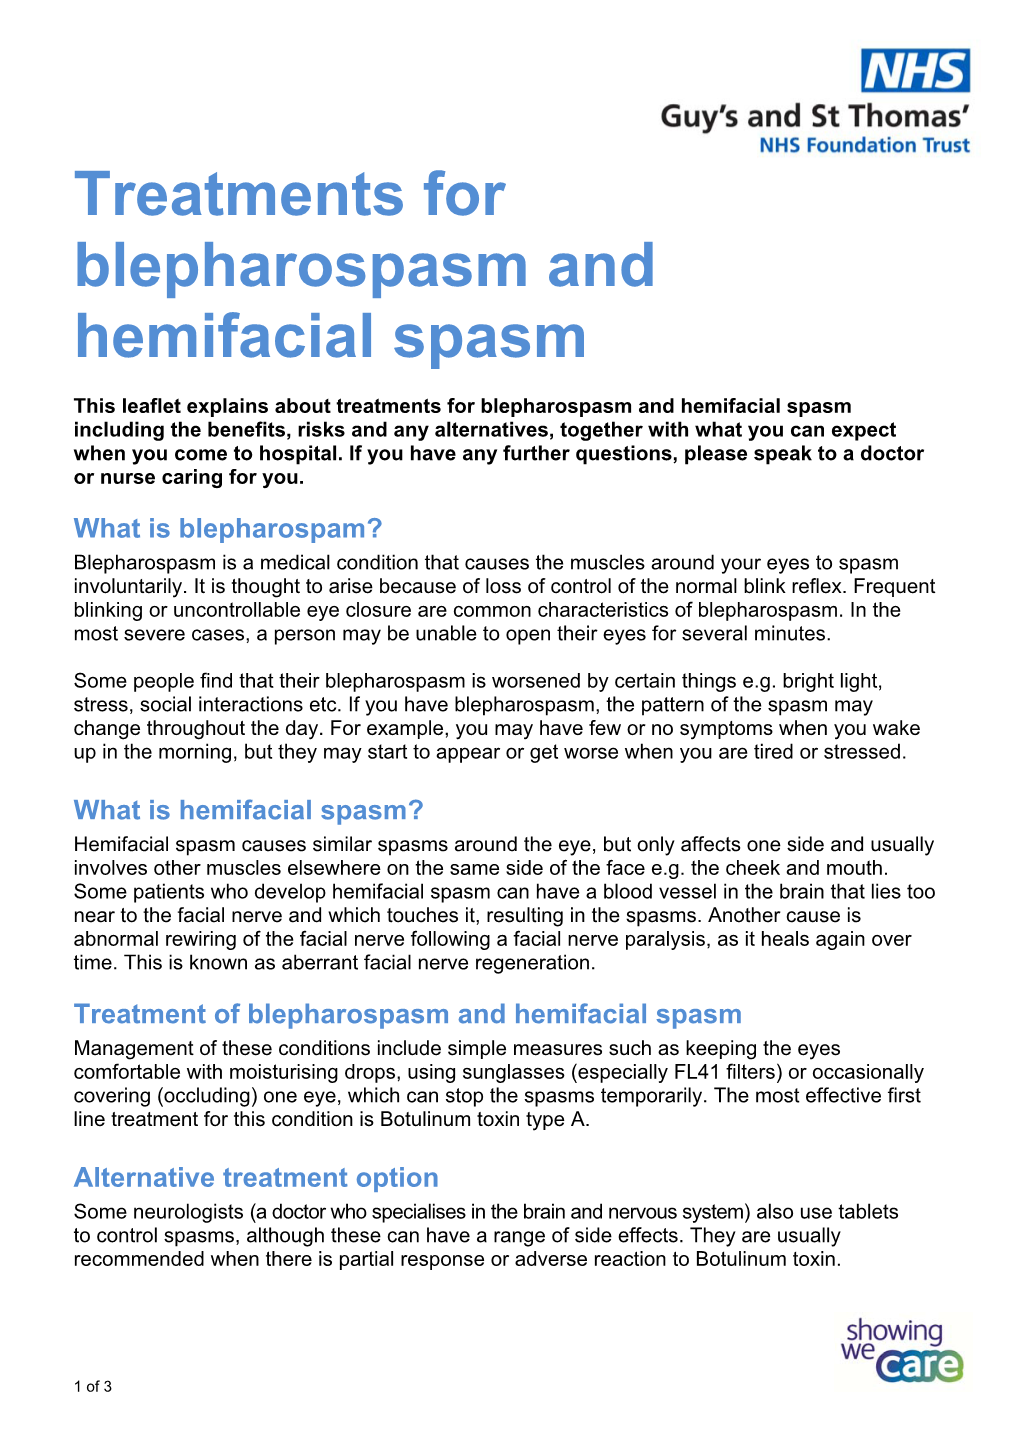 Treatments for Blepharospasm and Hemifacial Spasm